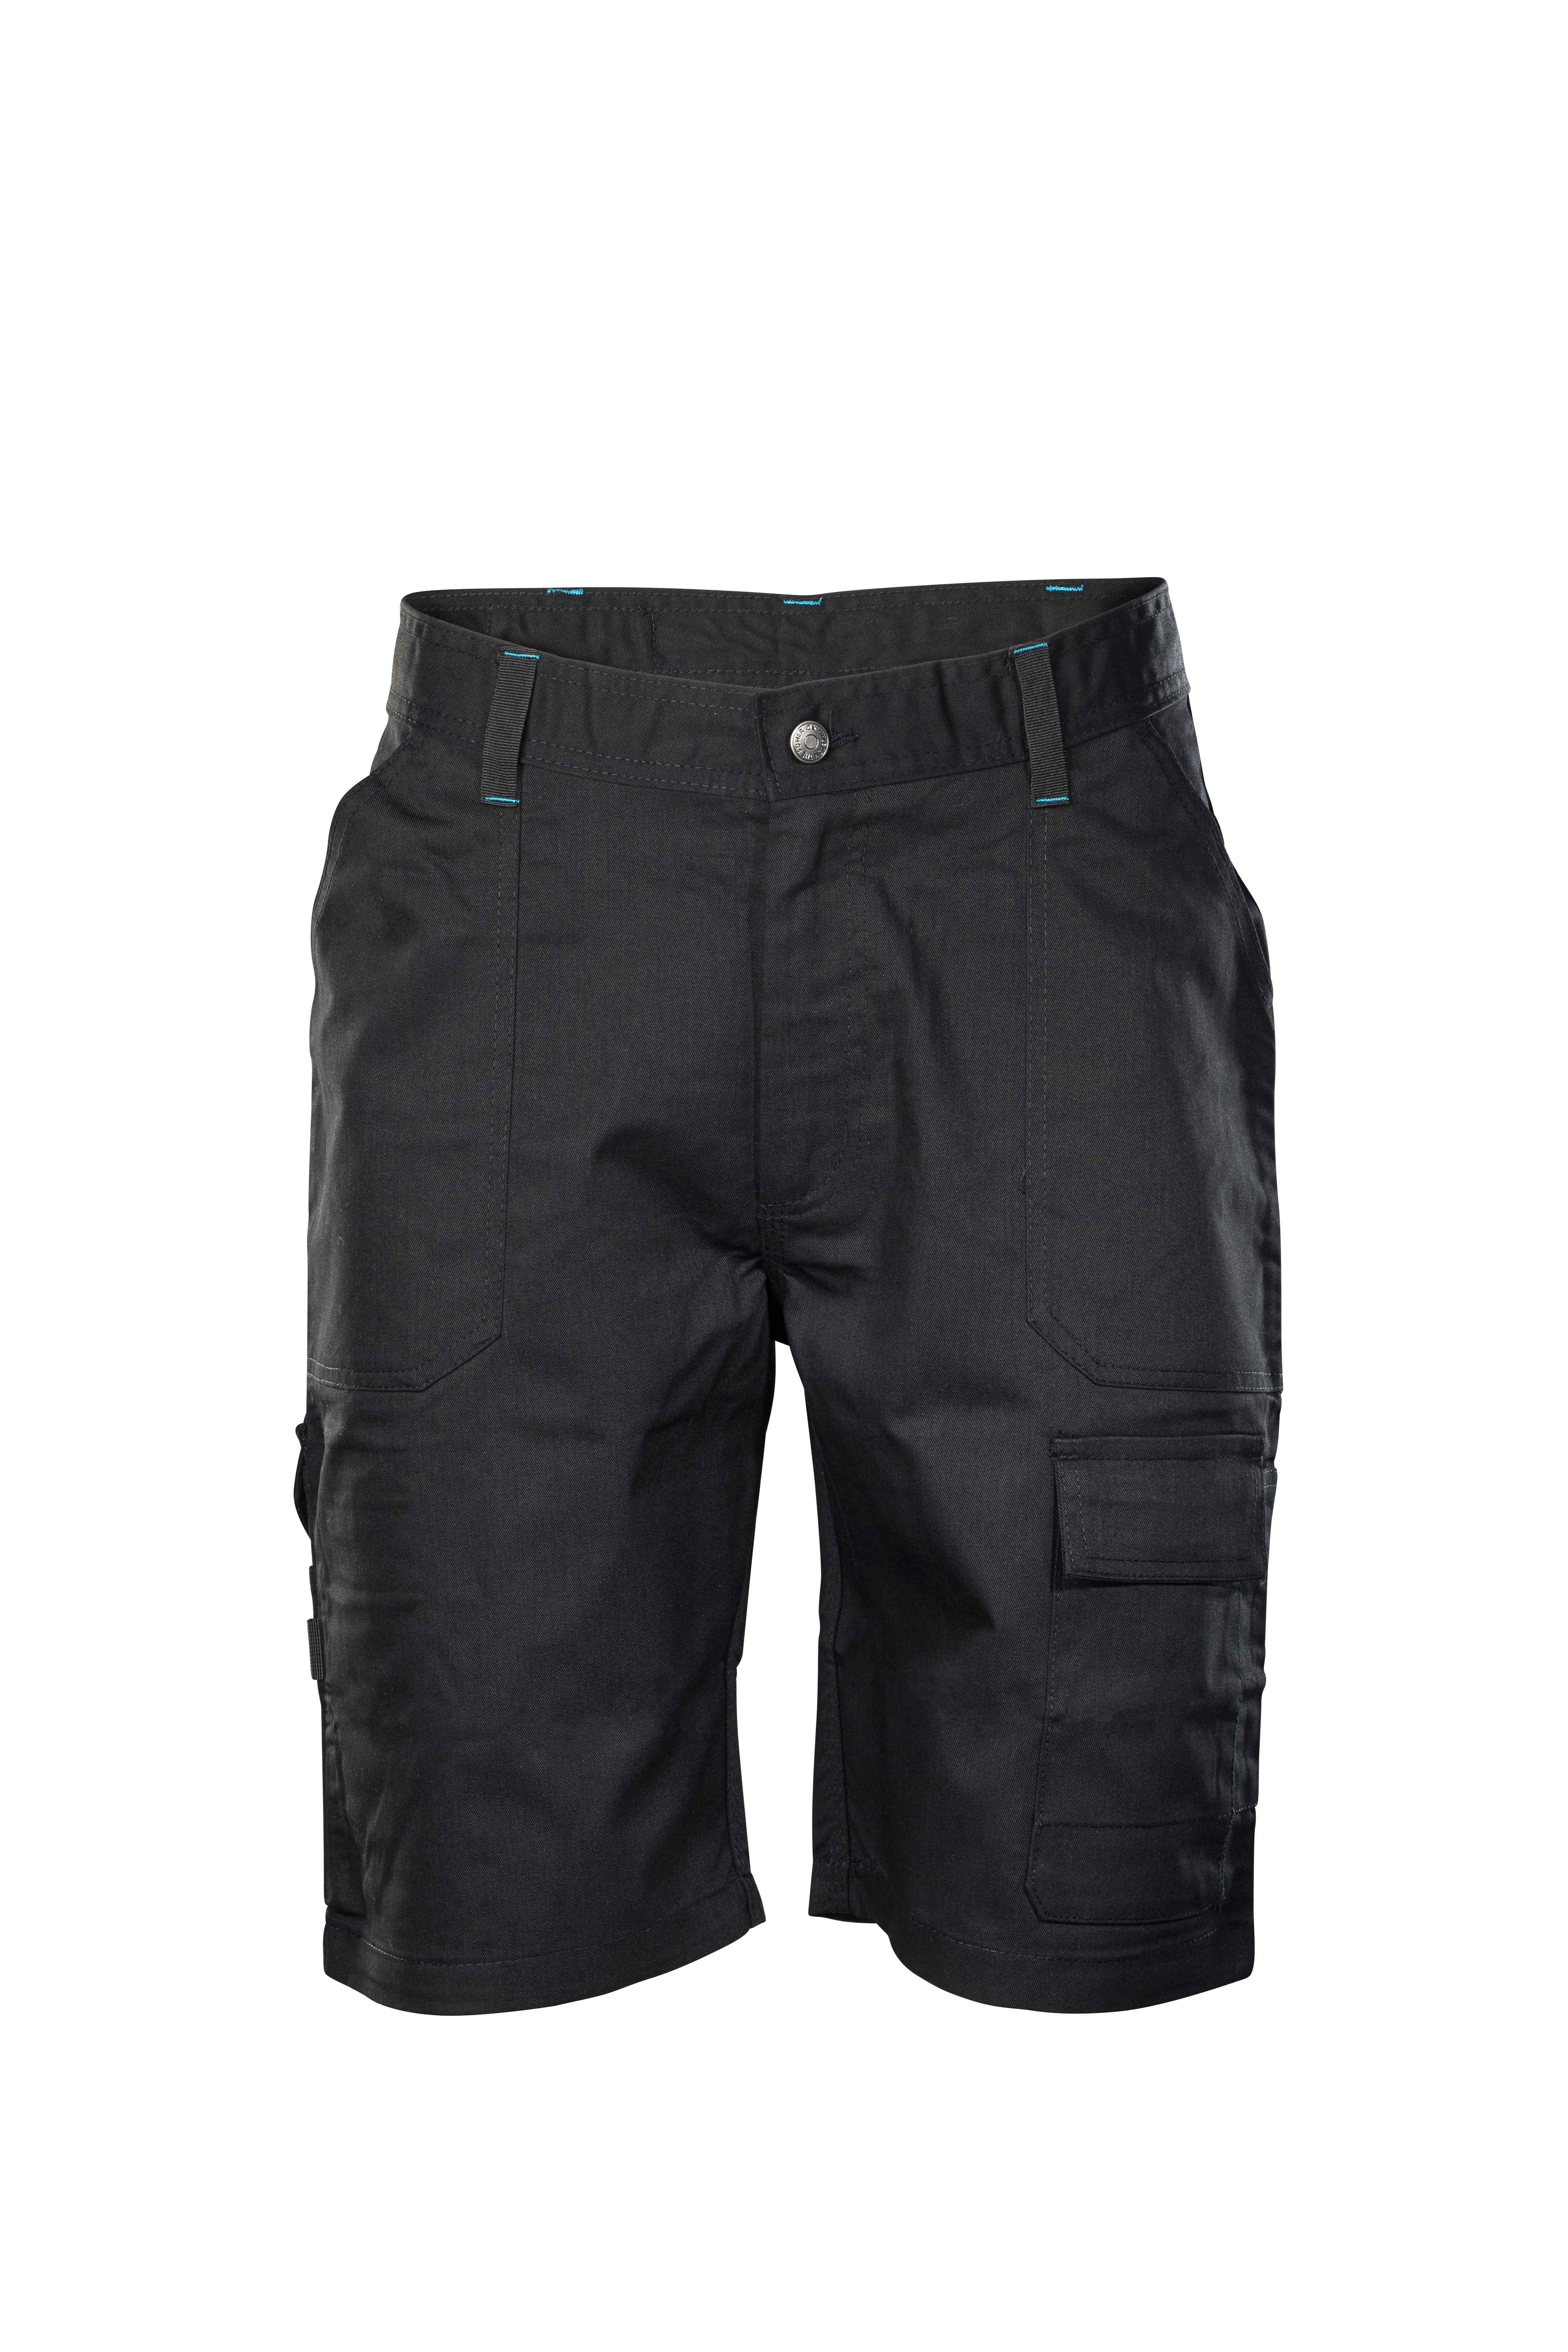 OX Multi Pocket Trade Shorts 40